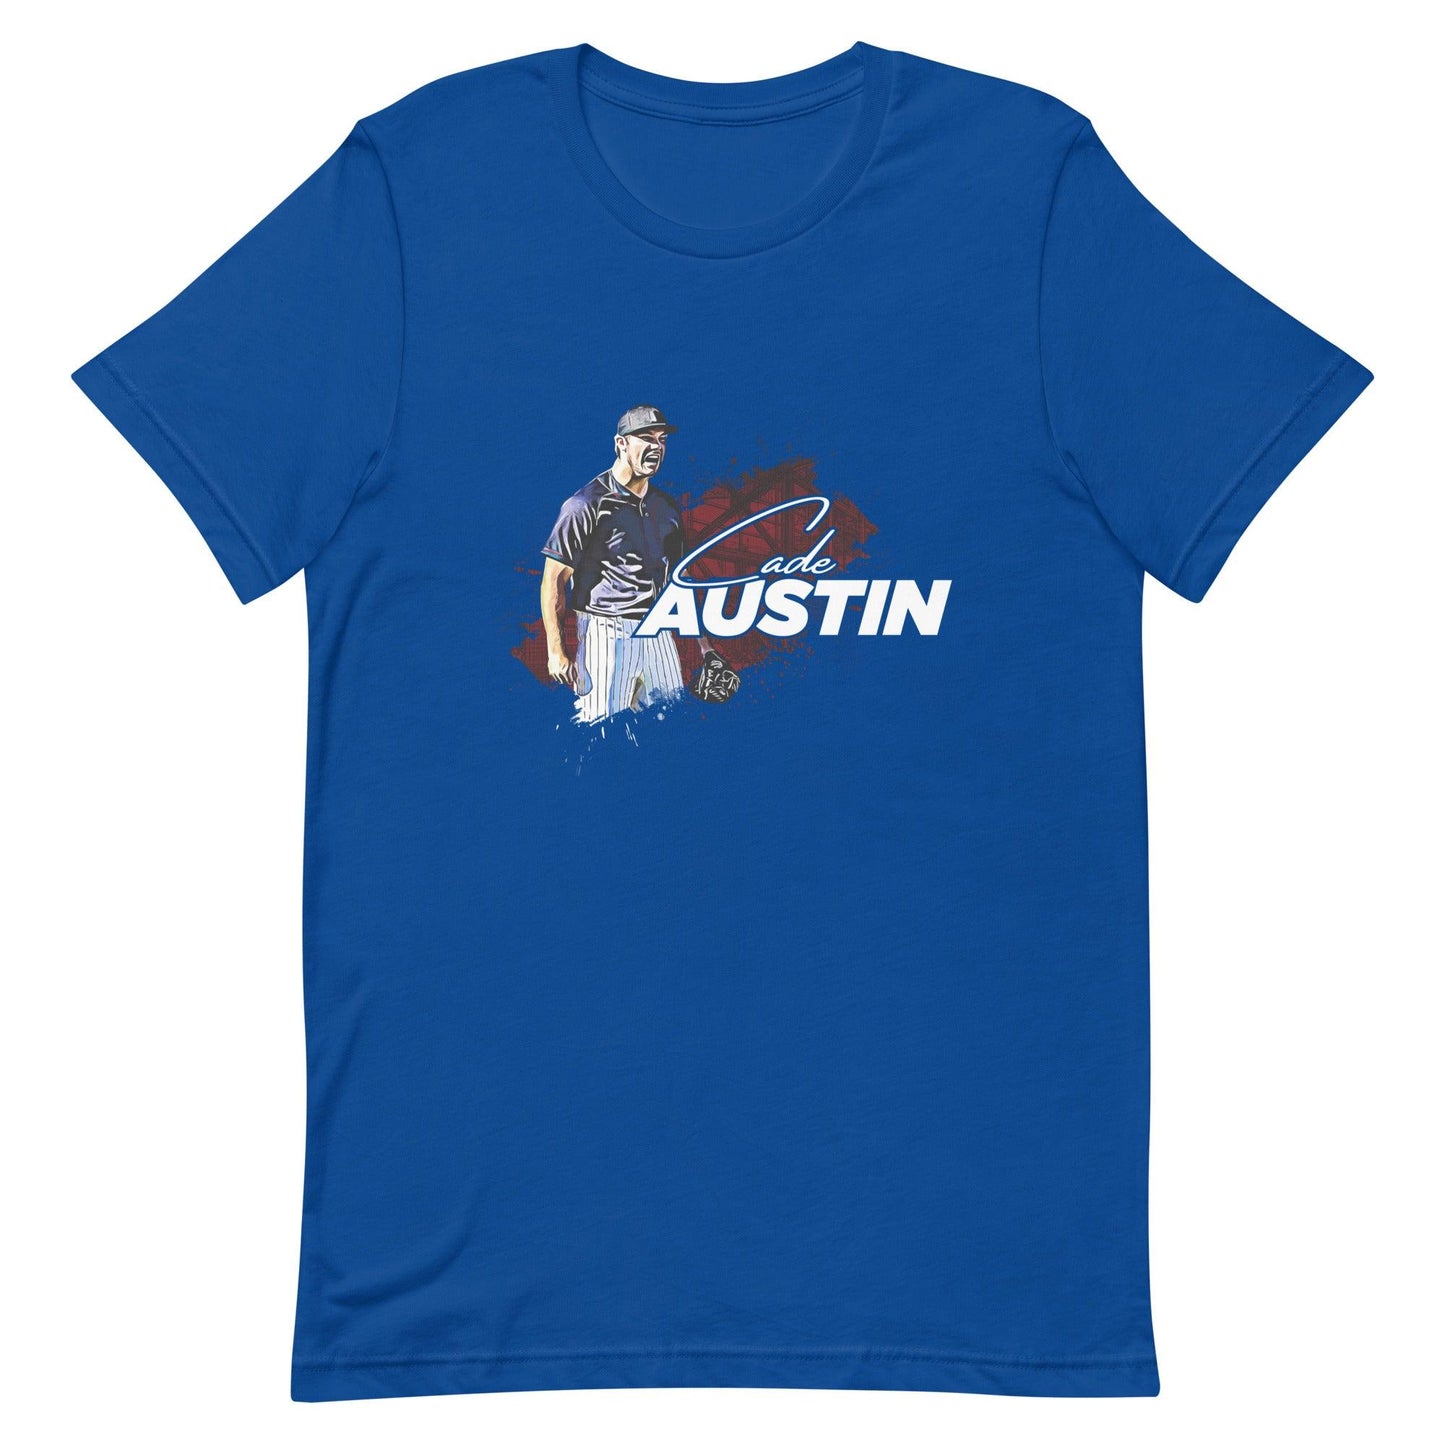 Cade Austin "Gameday" t-shirt - Fan Arch